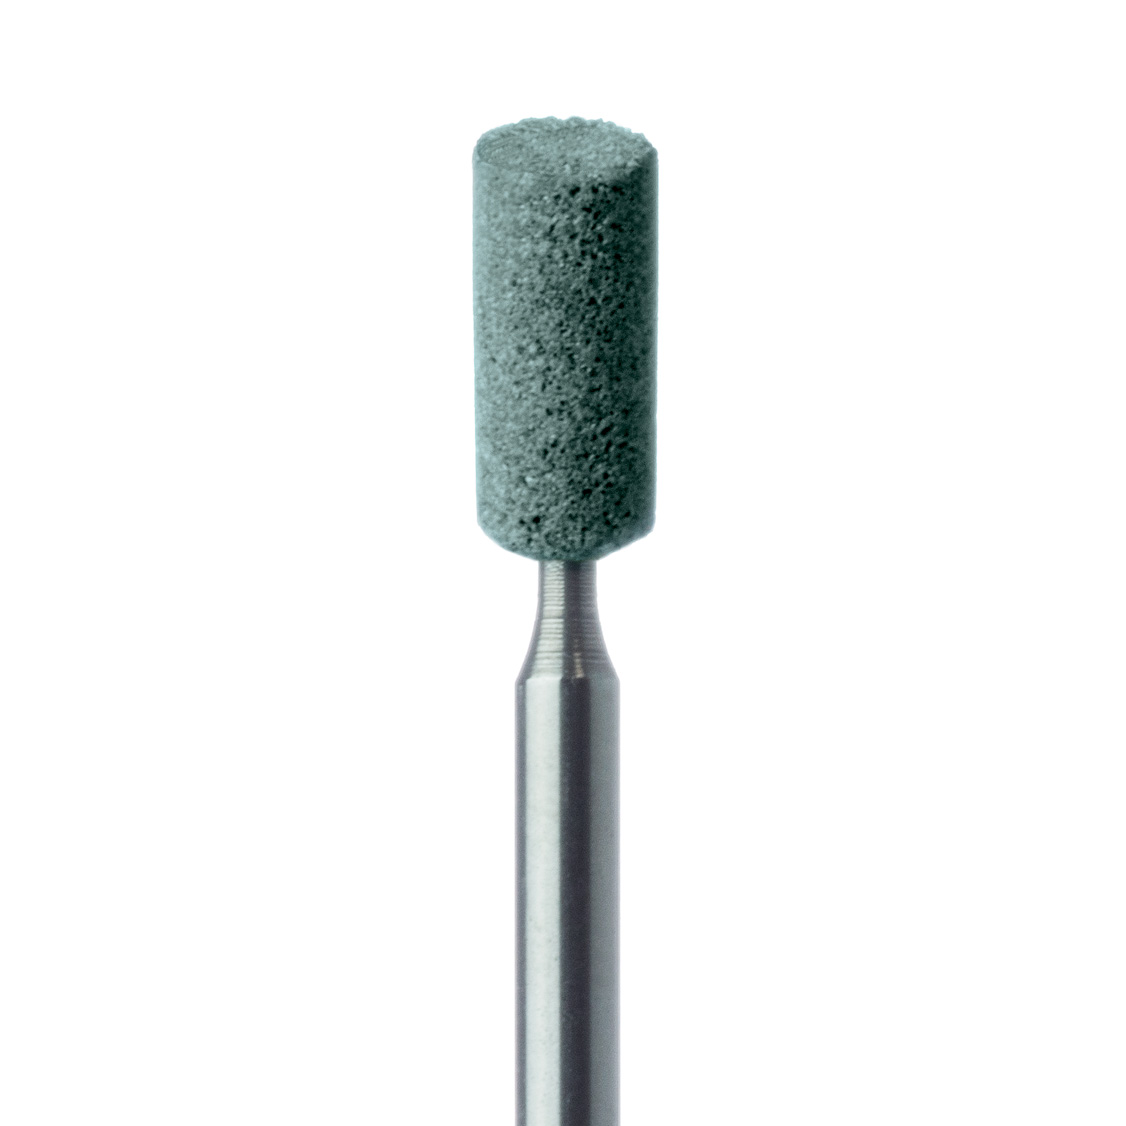 638F-025-FG-GRN Abrasive, Green, Long Cylinder, 2.5mm Ø, Fine, FG